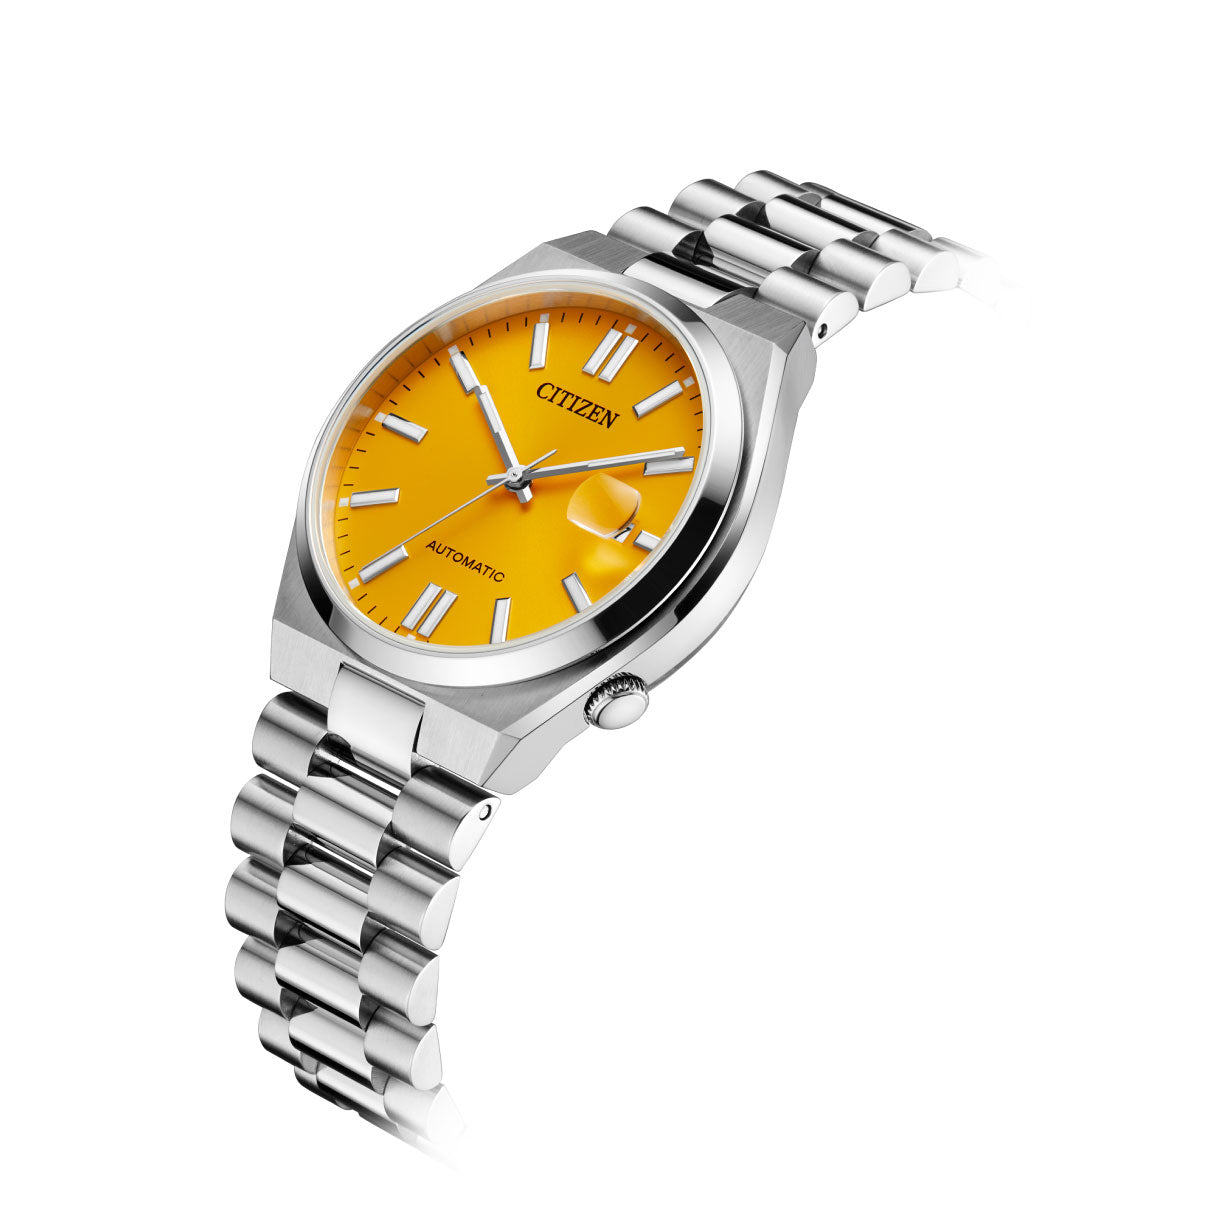 Citizen Men's Automatic Movement Yellow Dial Watch - NJ0150-81Z